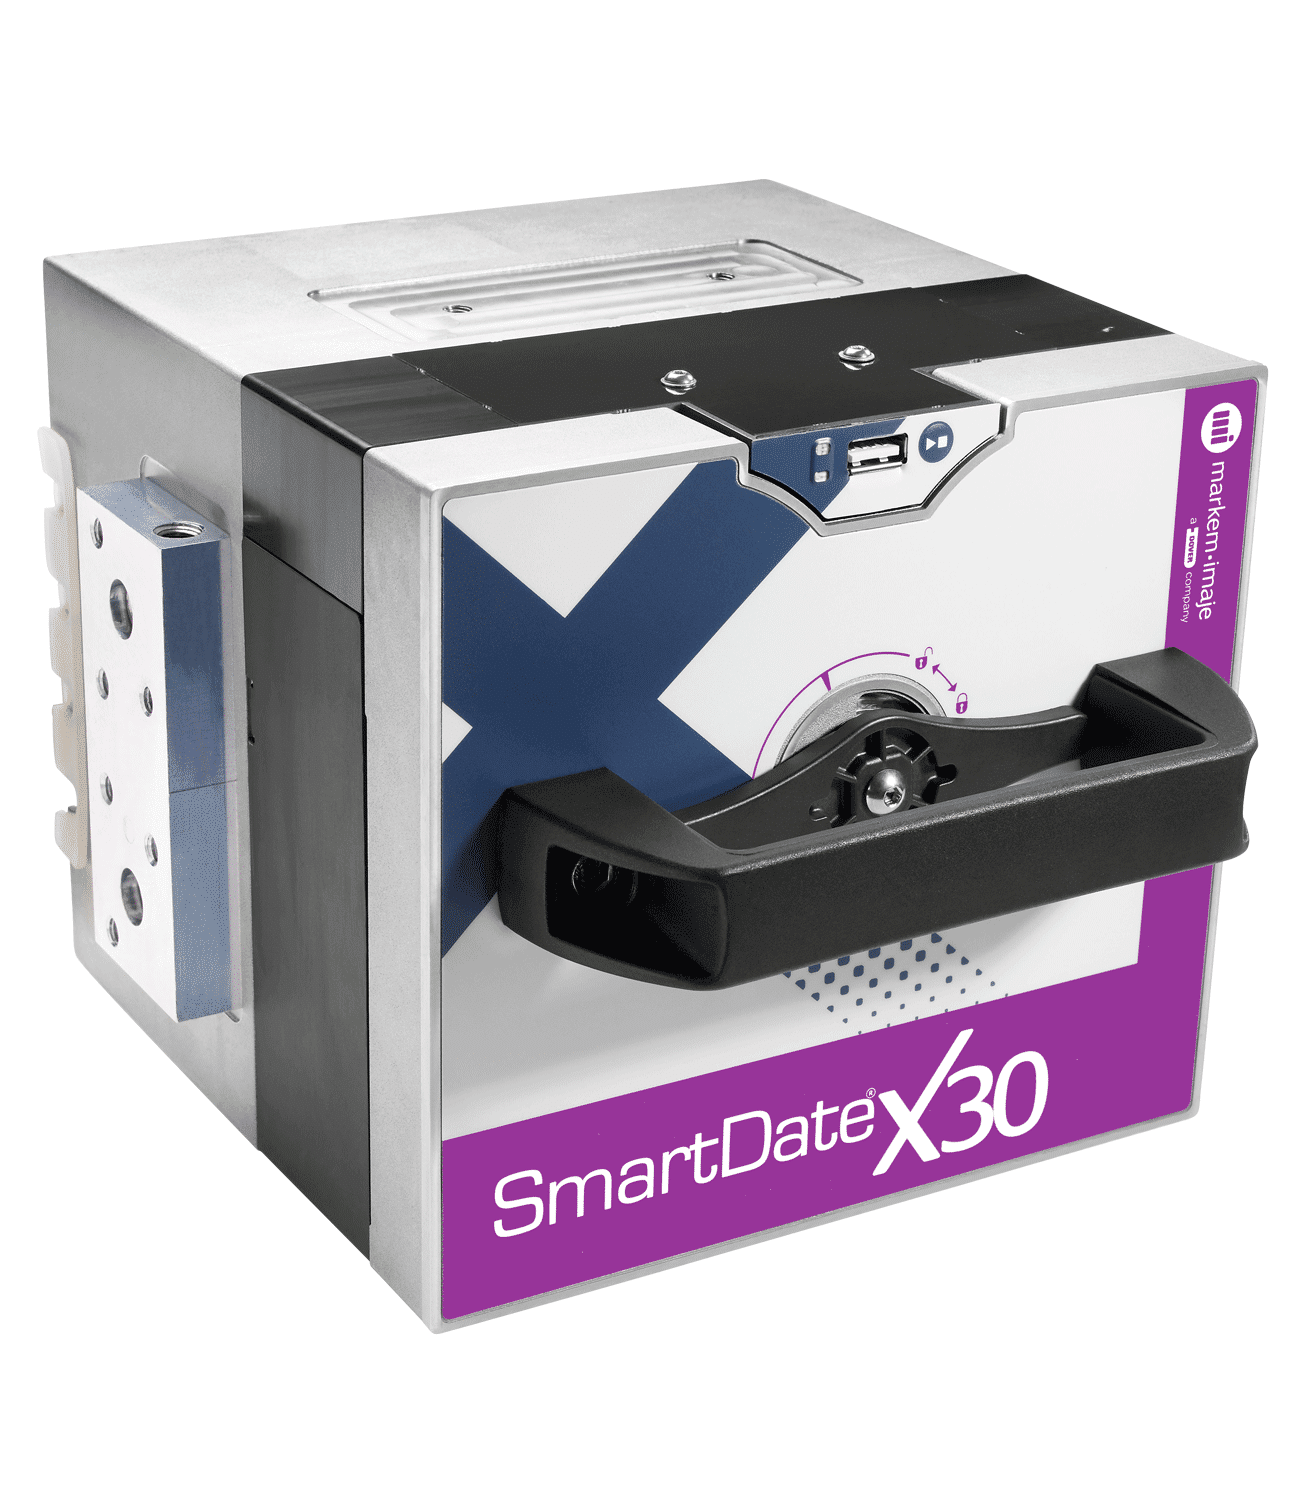 smartdate-x30-tto-g2016-0504-1300x1500-8-2